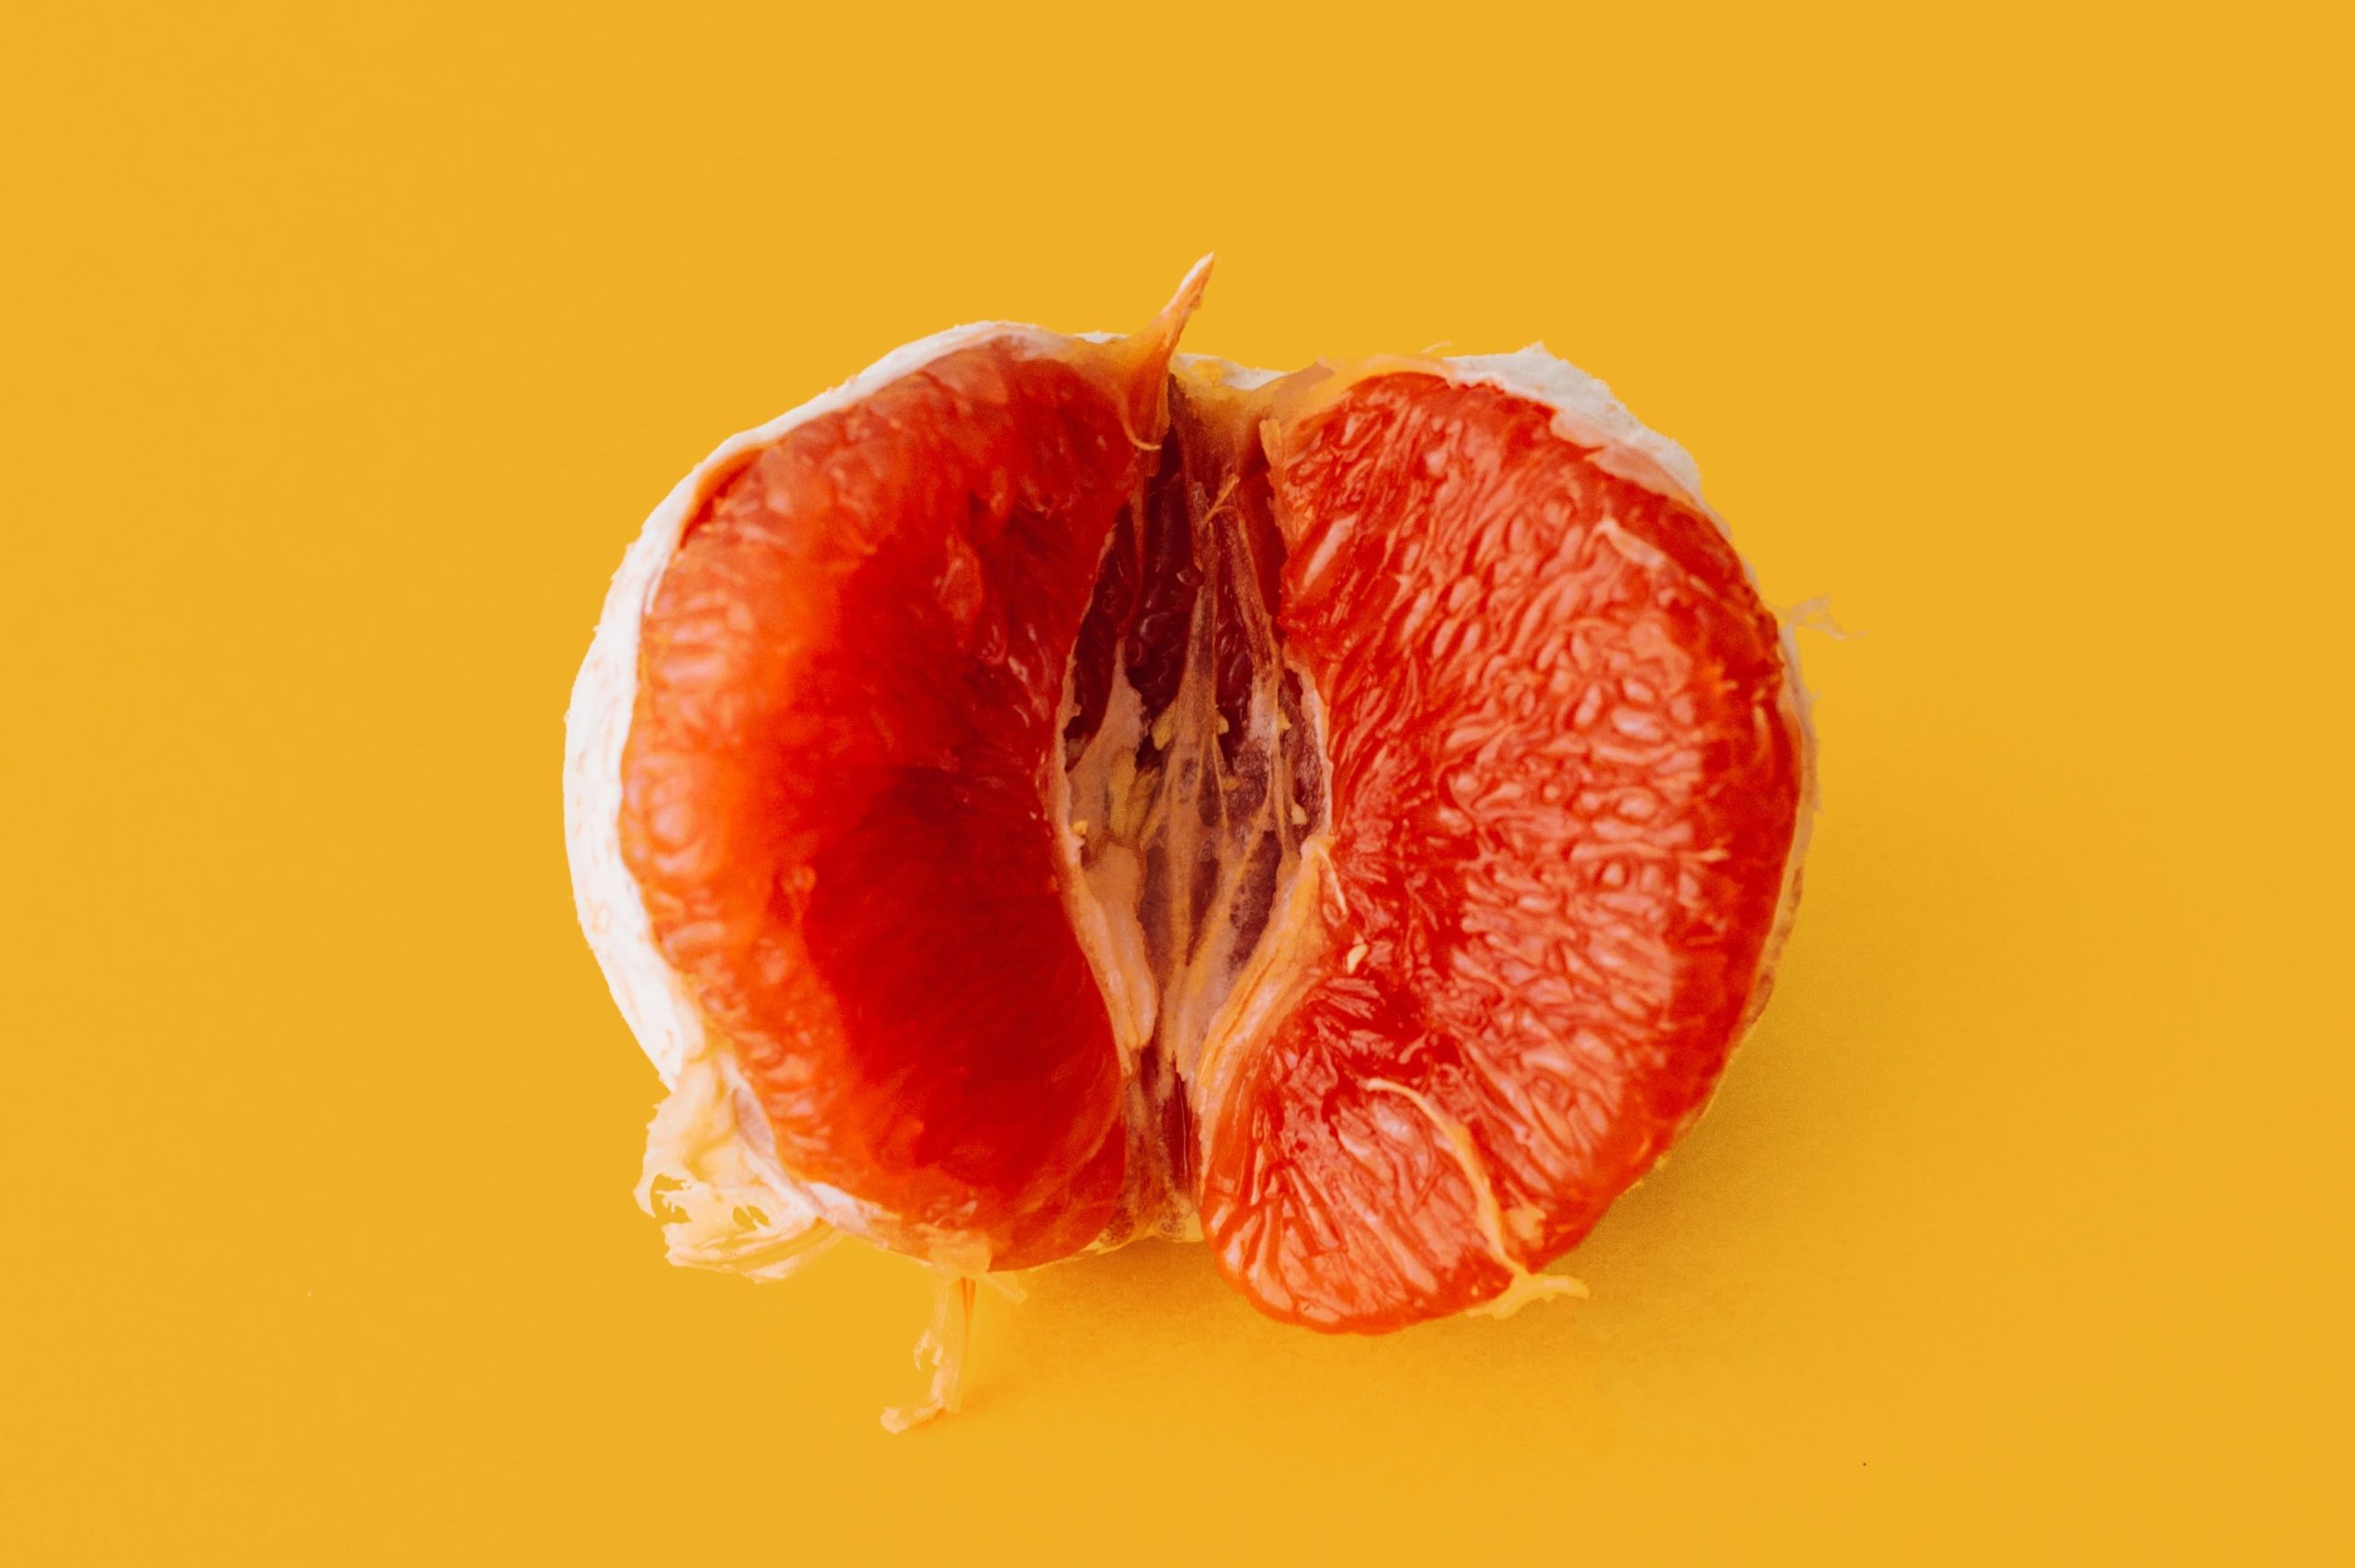 A peeled tangerine split in half.